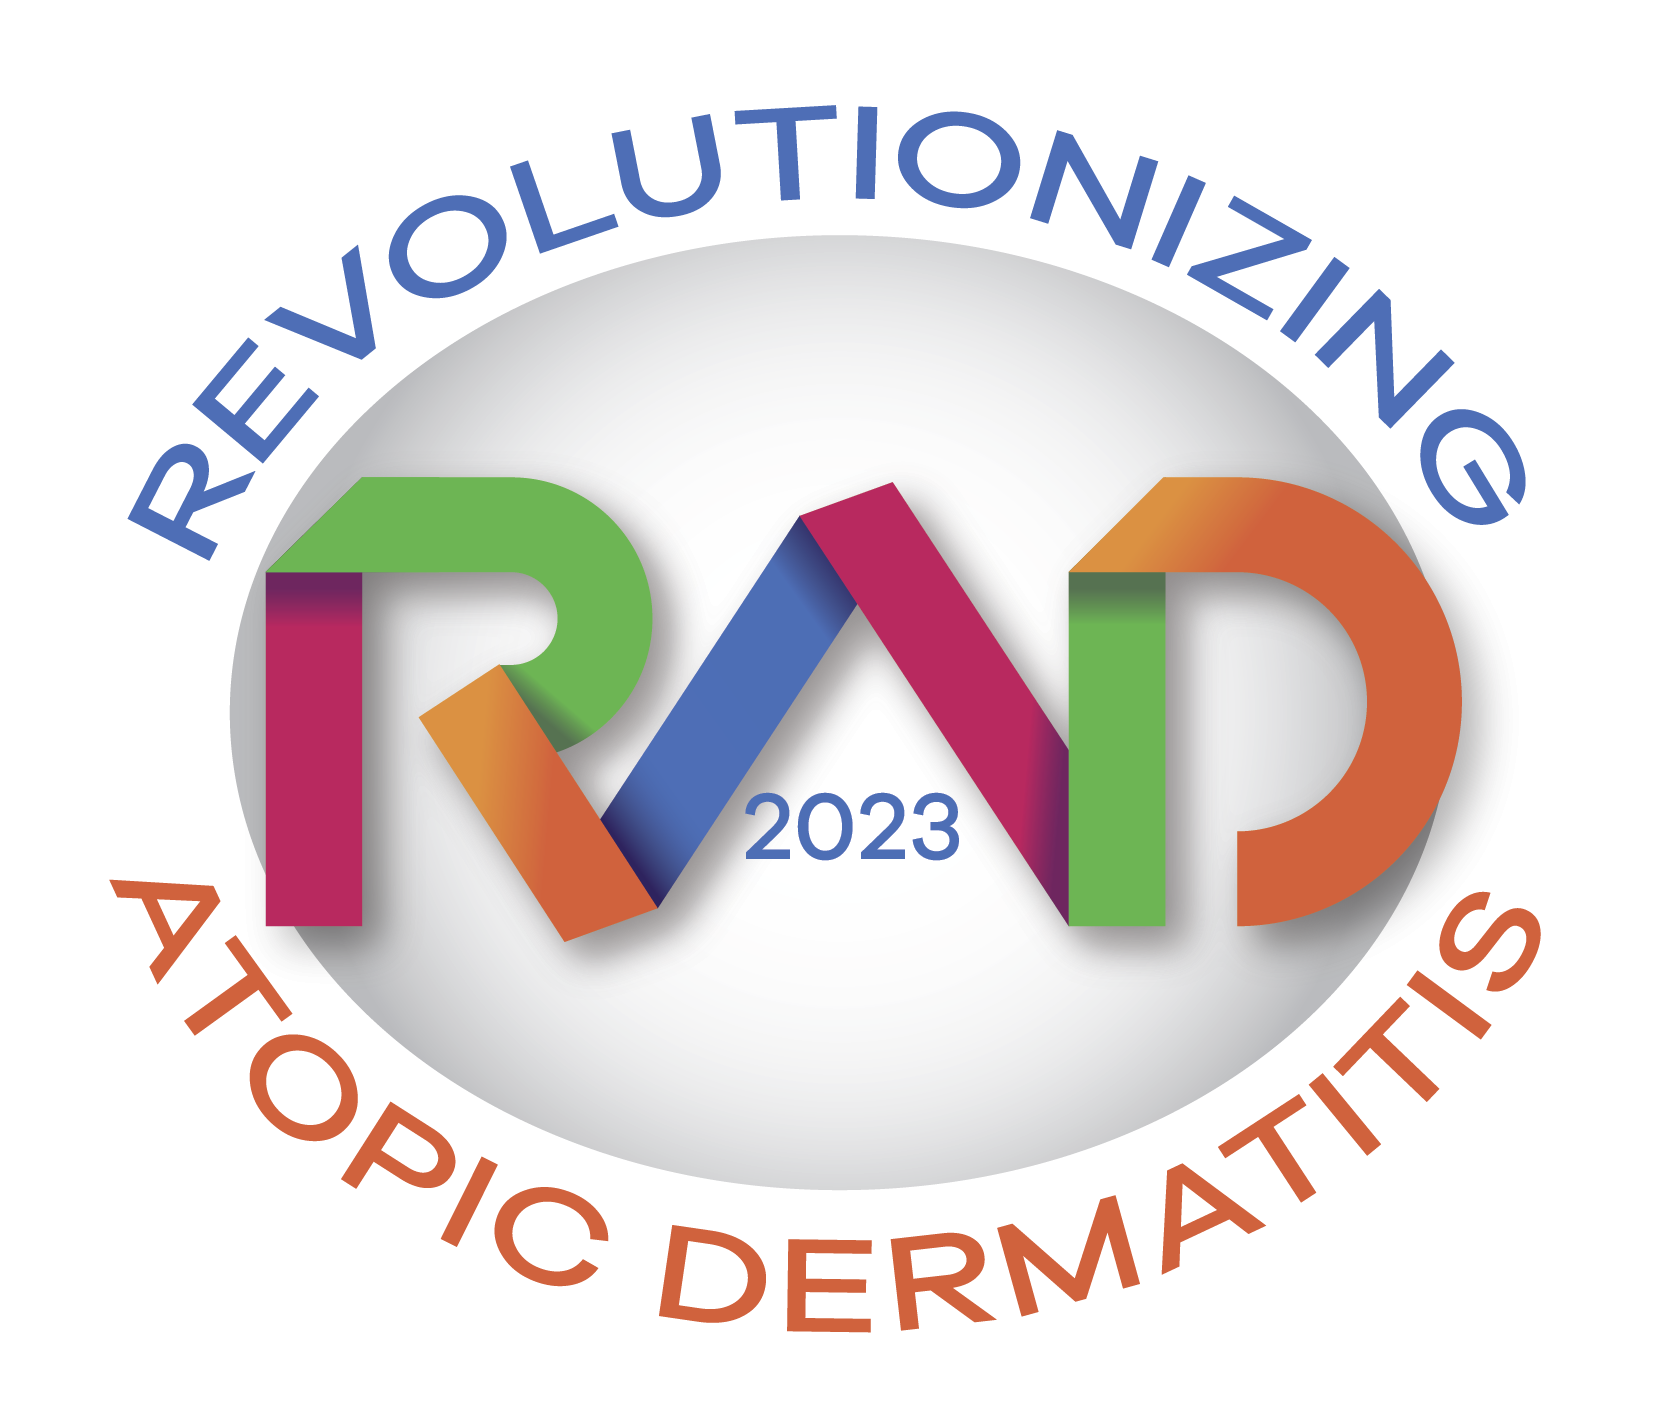 Revolutionizing Atopic Dermatitis (RAD) Conference Education & Resources